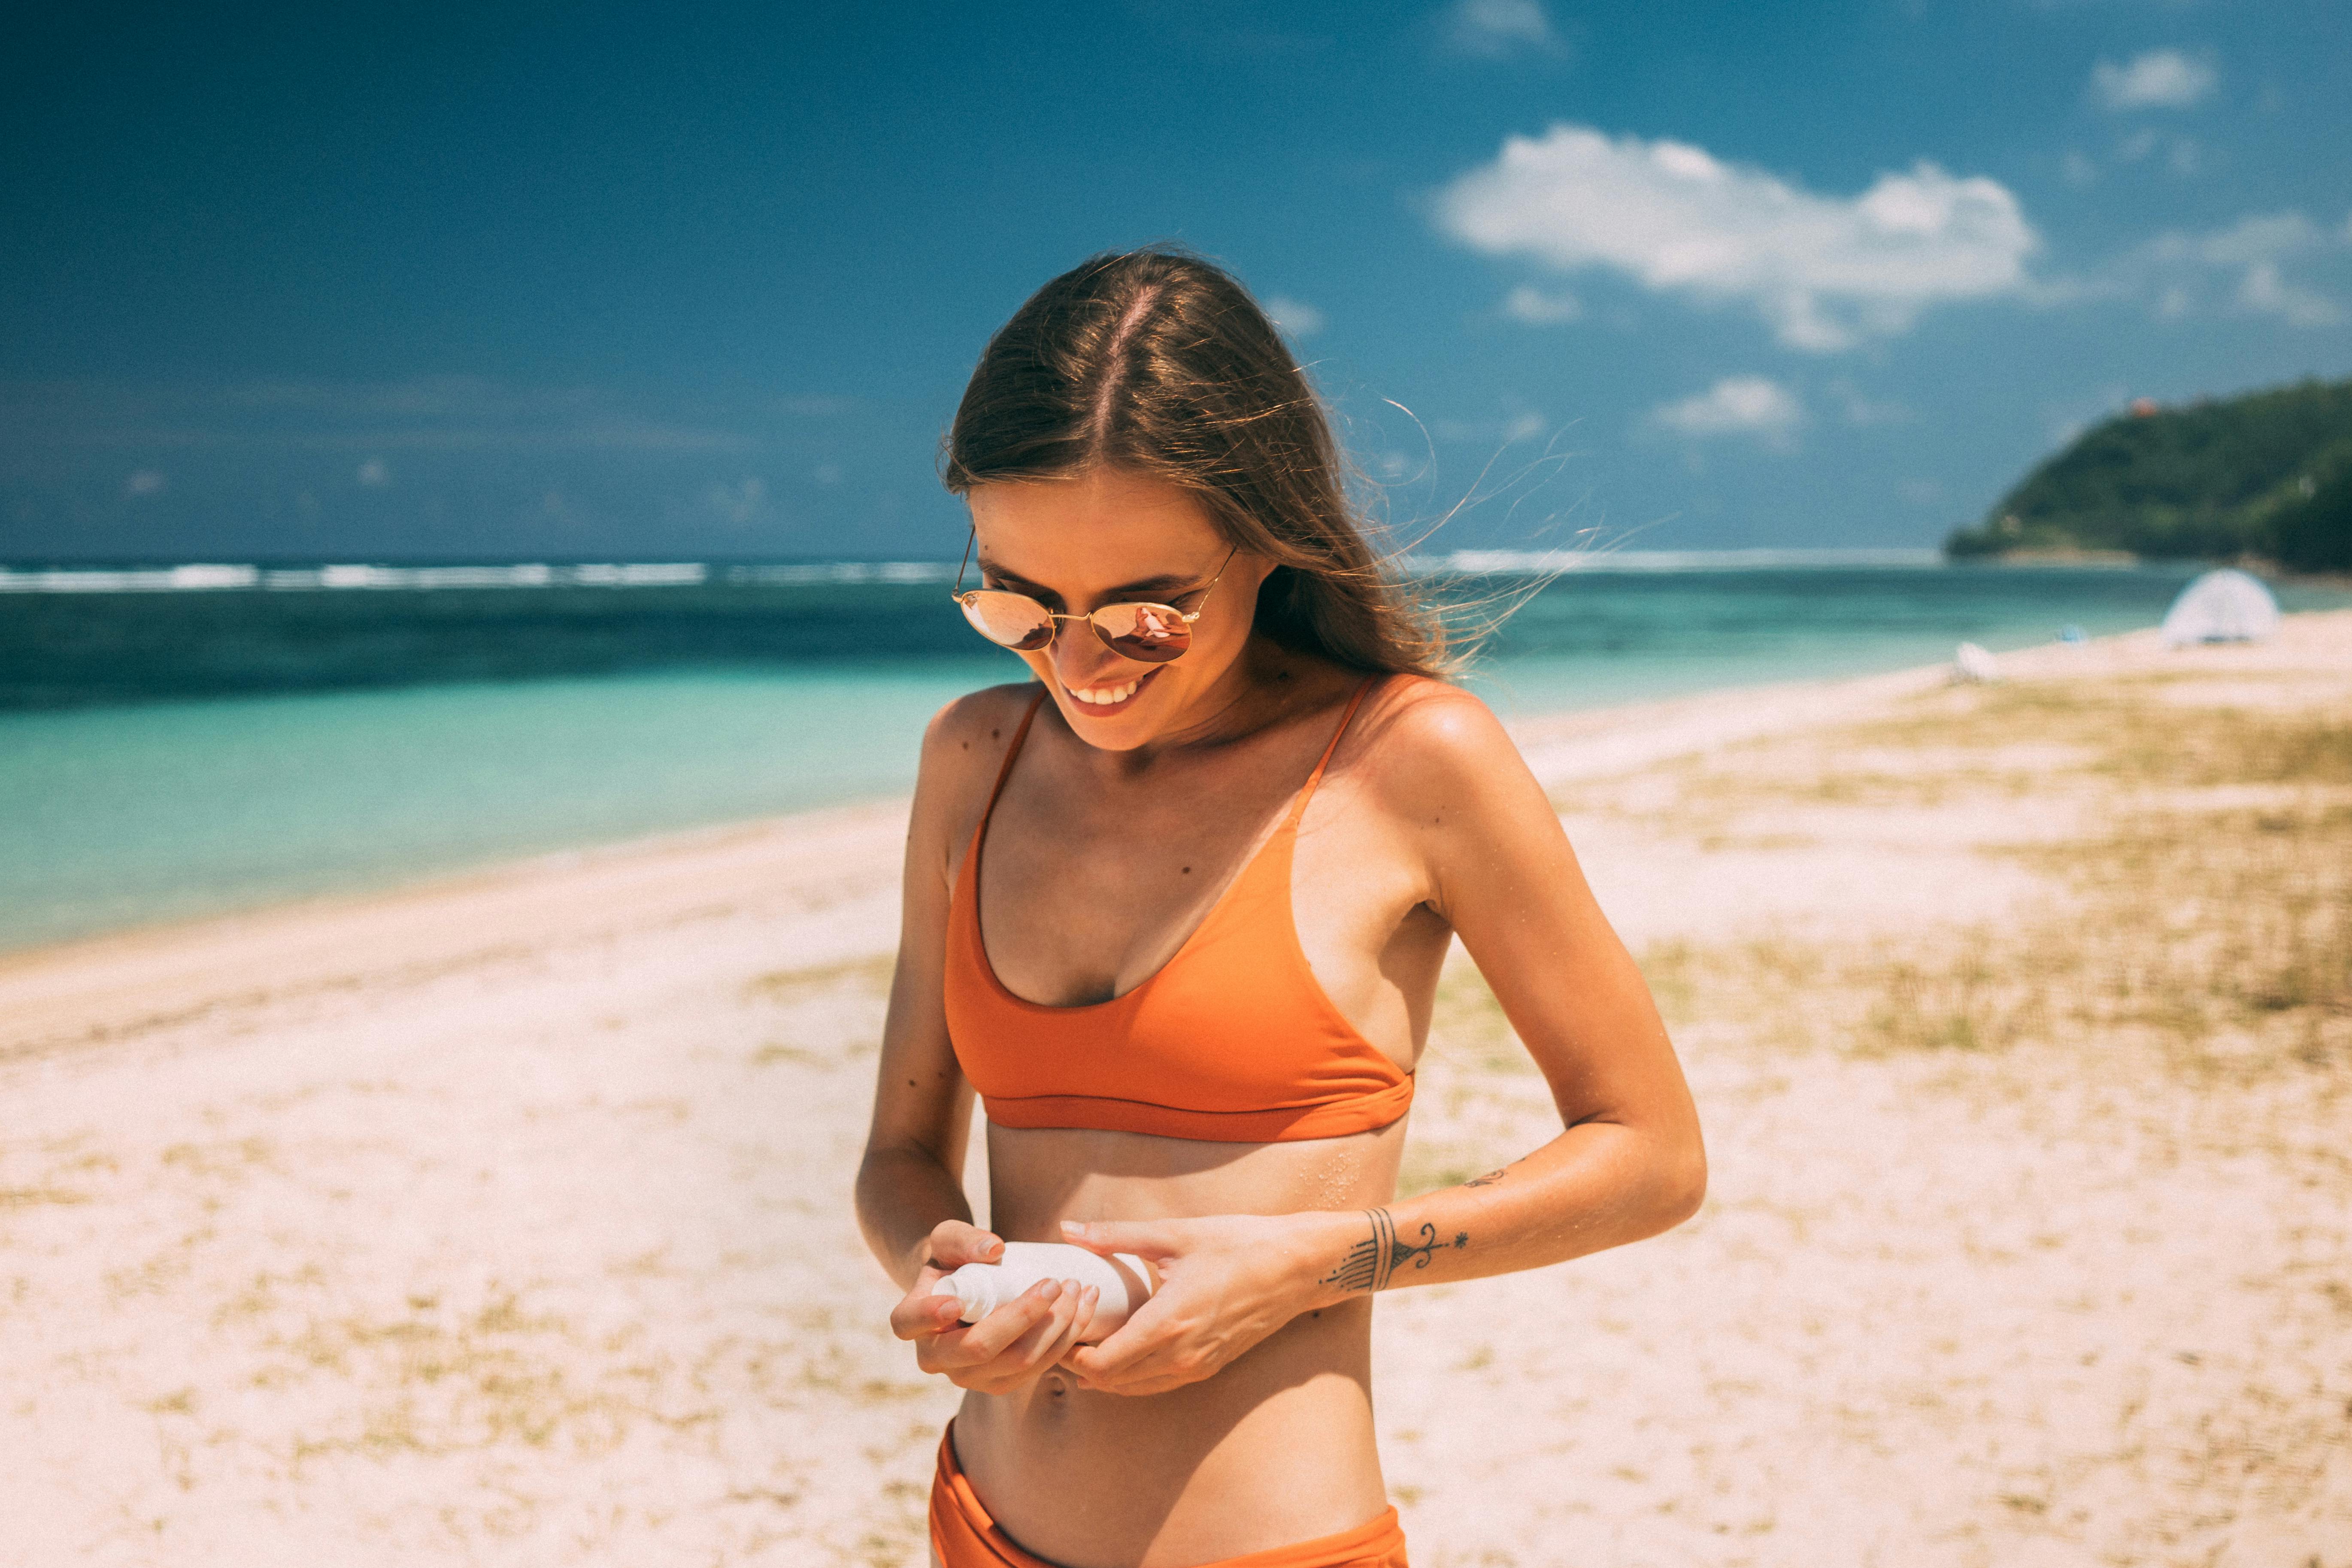 Bikini Premium Images – Browse 26,276 Stock Photos, Vectors, and Video